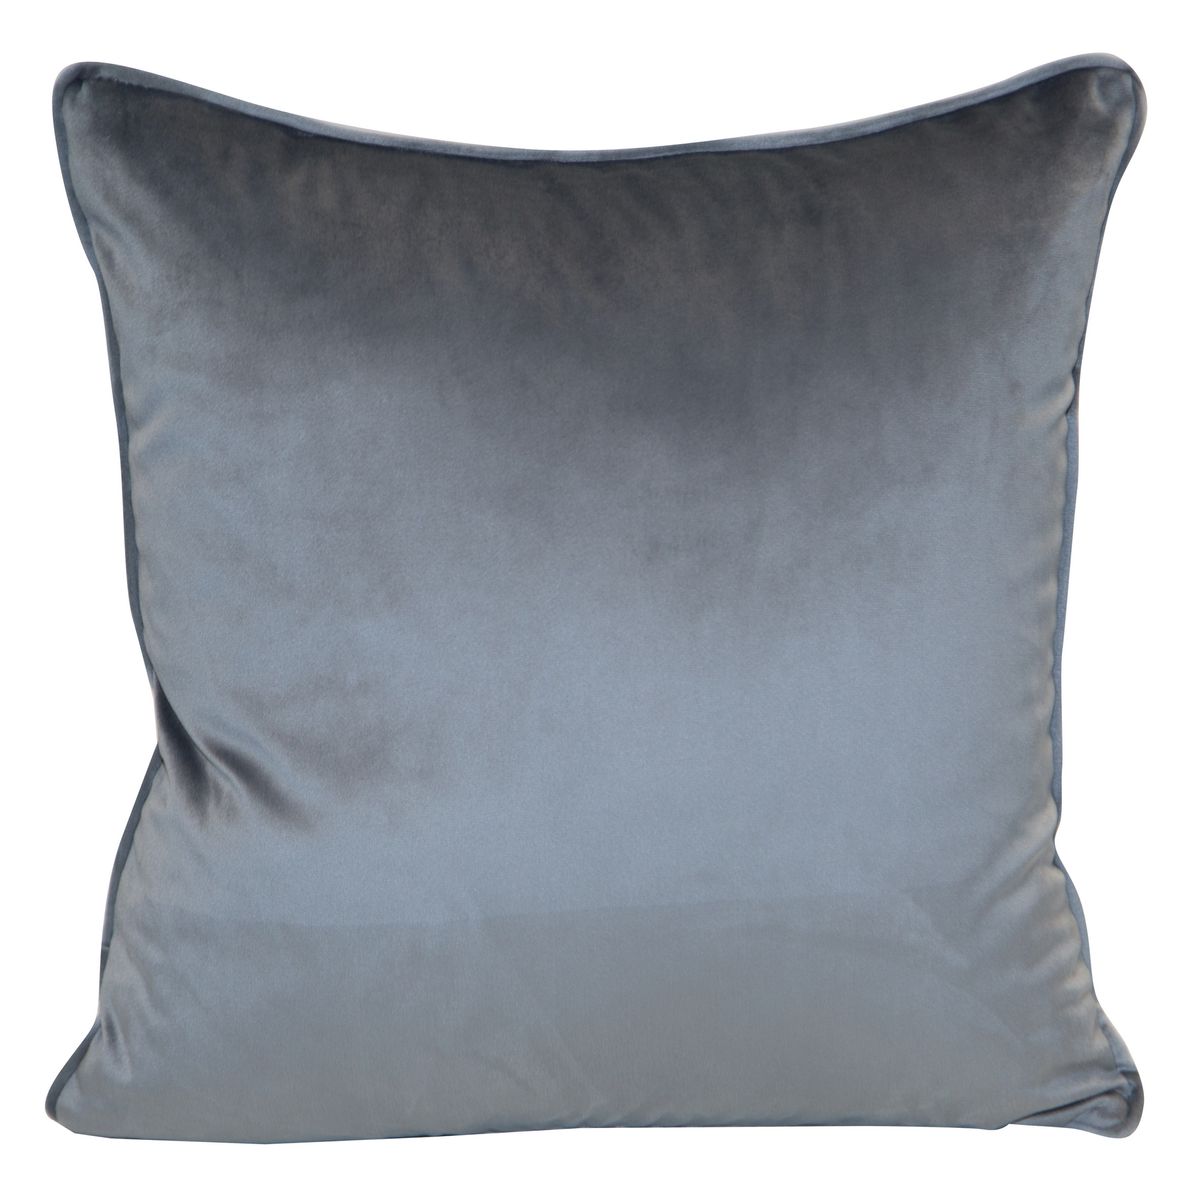 Dekoratyvinė aksominė pagalvėlė “Sibel” pilka, 2 vnt.